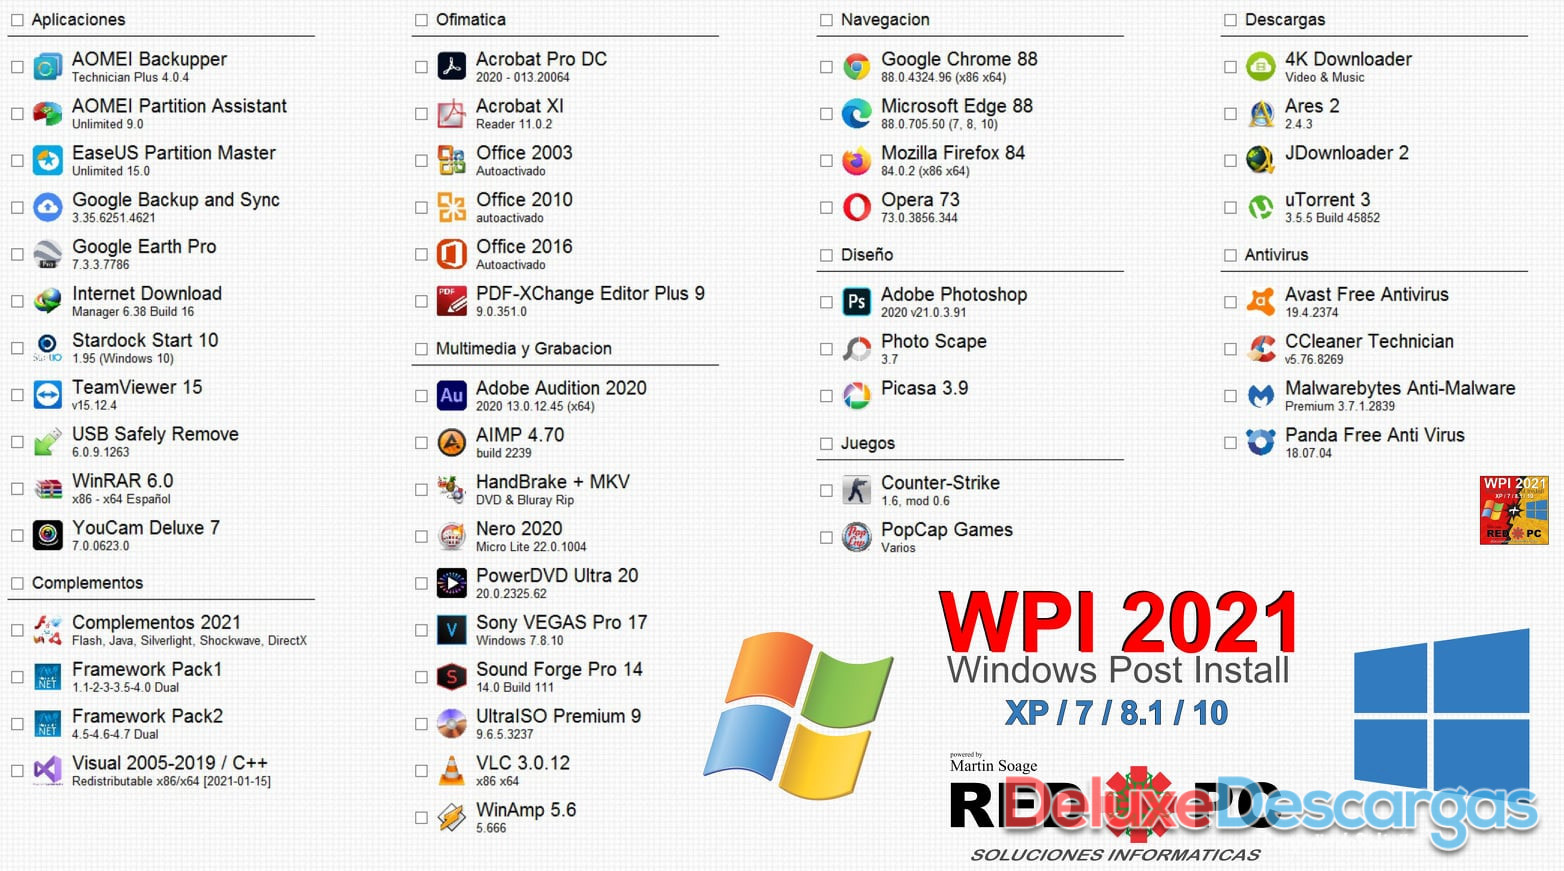 WPI 2021 Windows Post Install - Full Español 